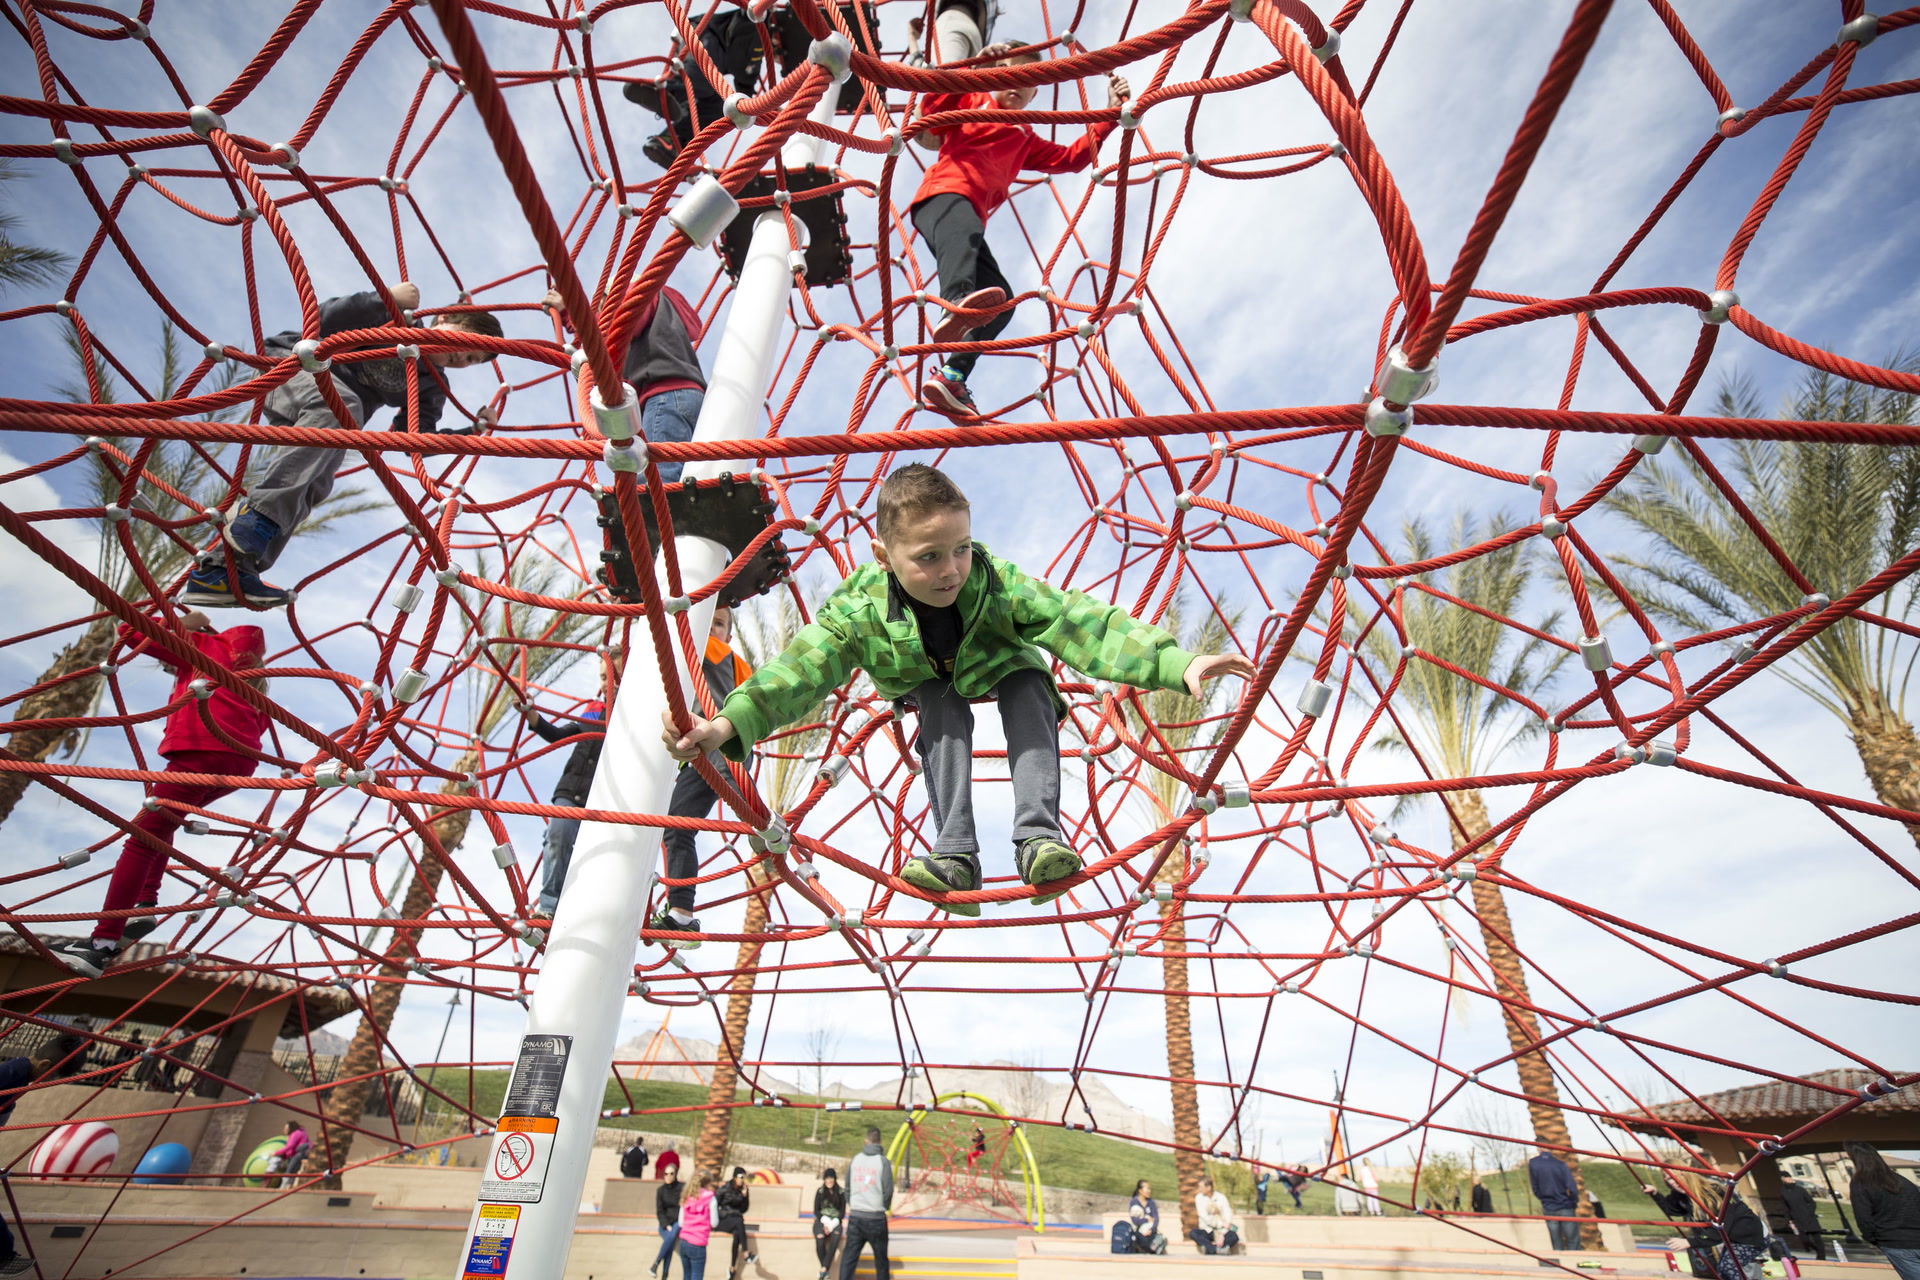 Summerlin's newest park offers kid-friendly adventures